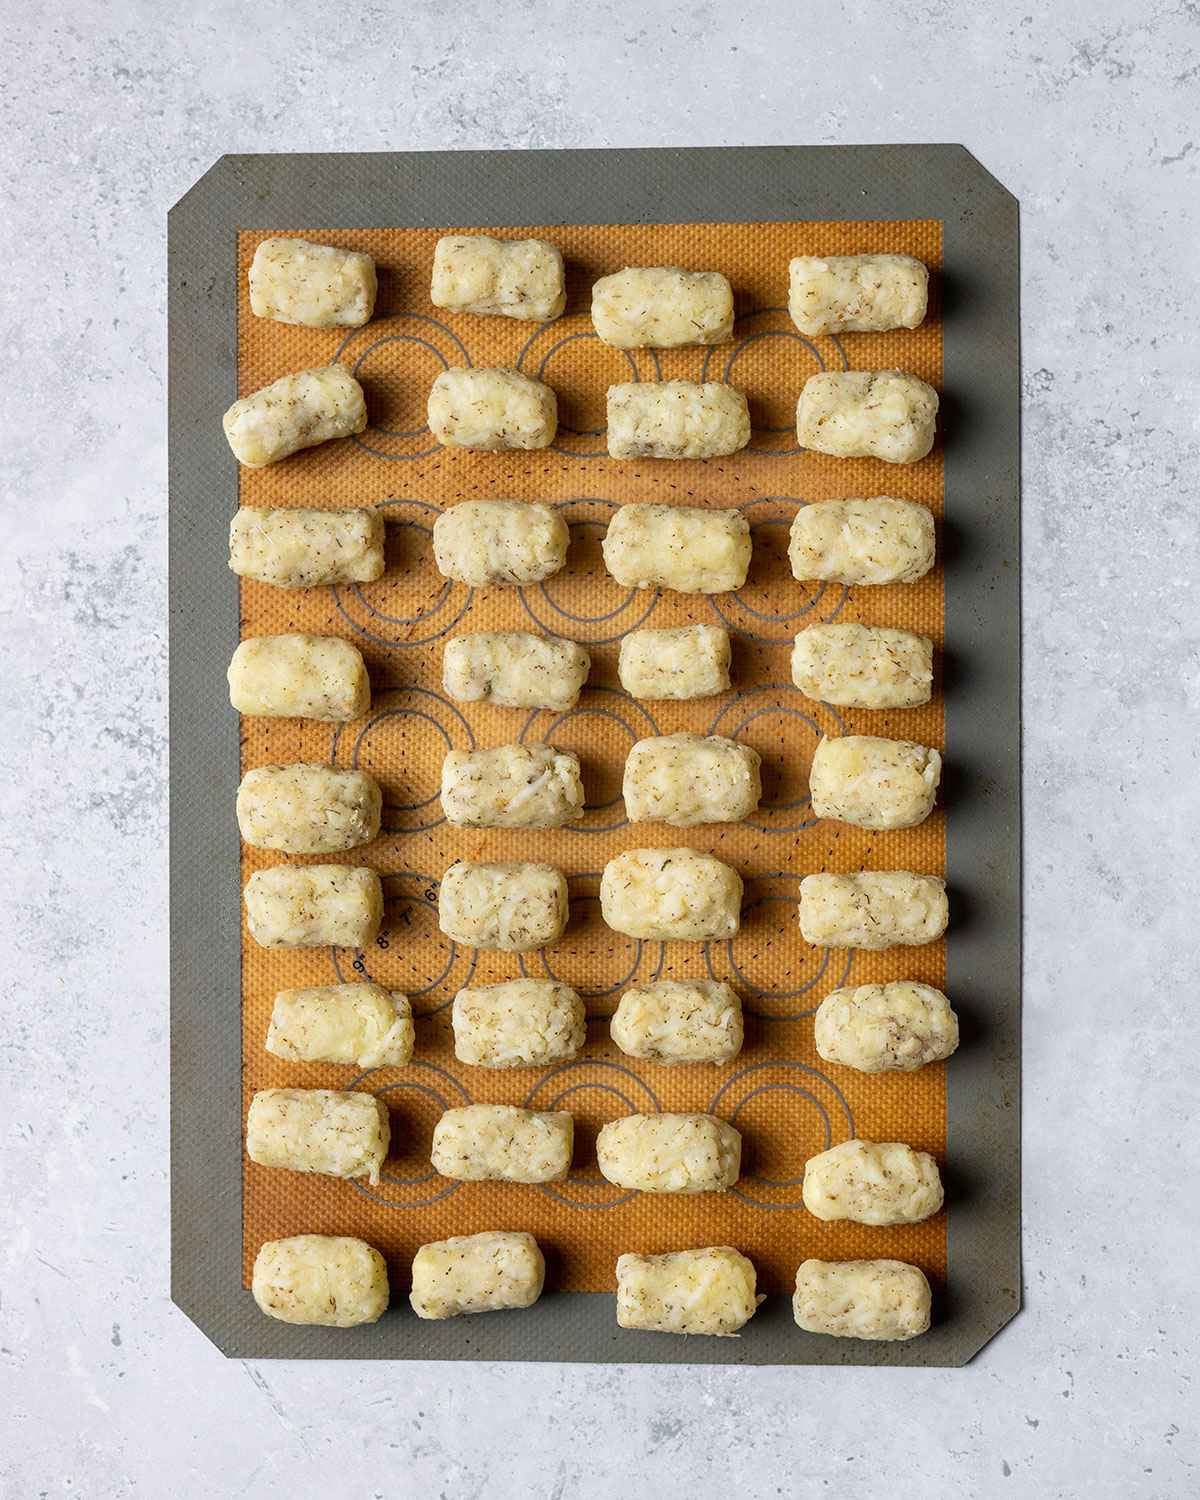 Potato tots neatly arranged on silicone baking mat